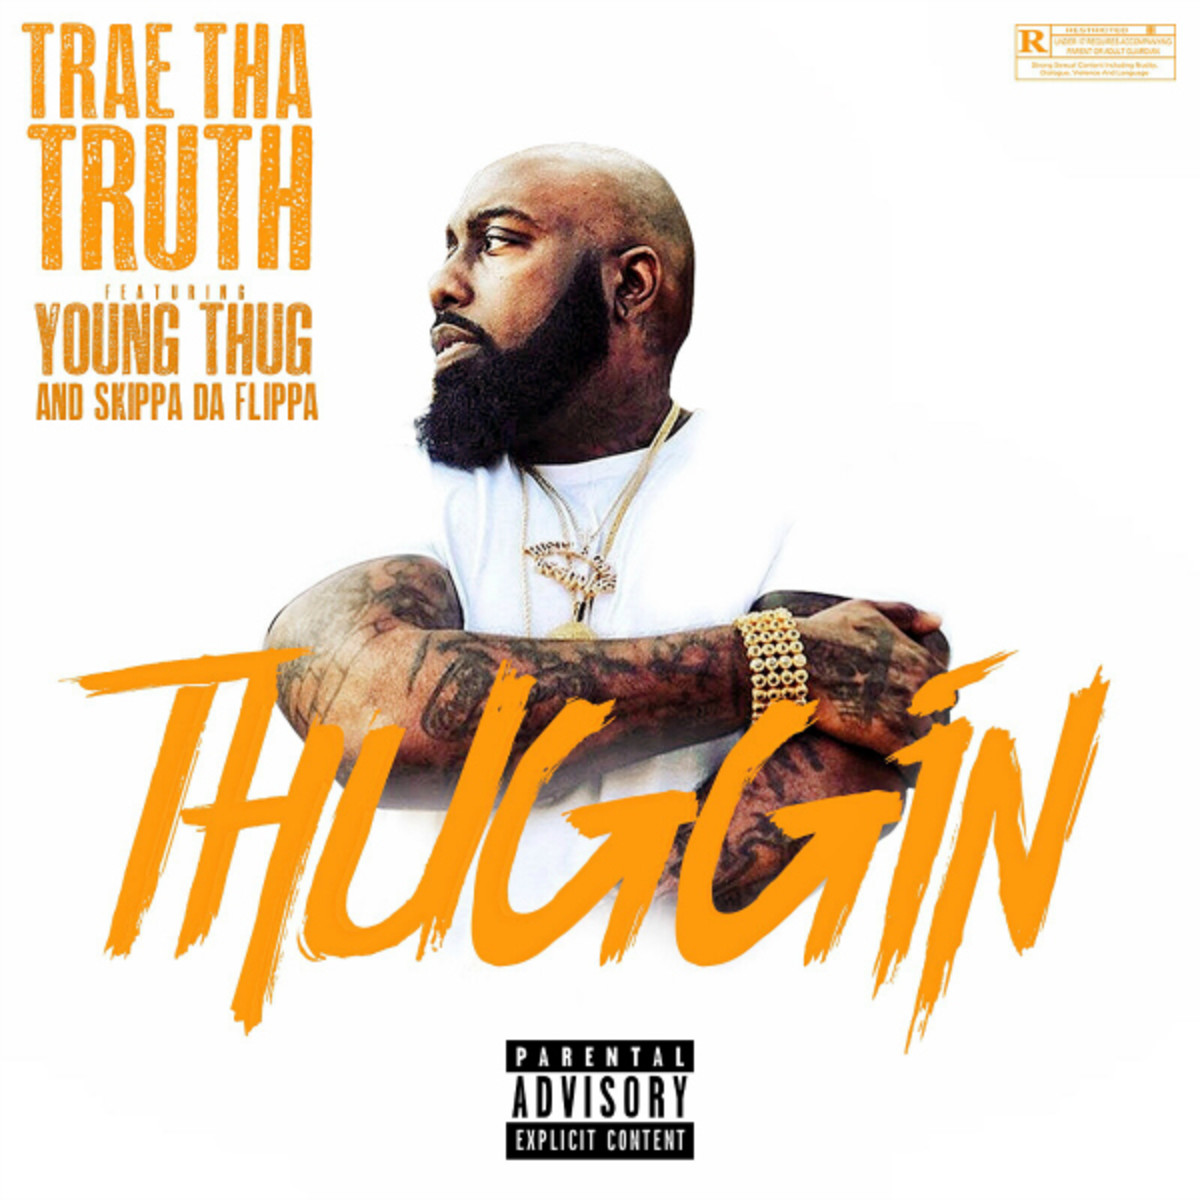 Premiere: Trae tha Truth Grabs Young Thug and Skippa Da Flippa for New Song 1200 x 1200